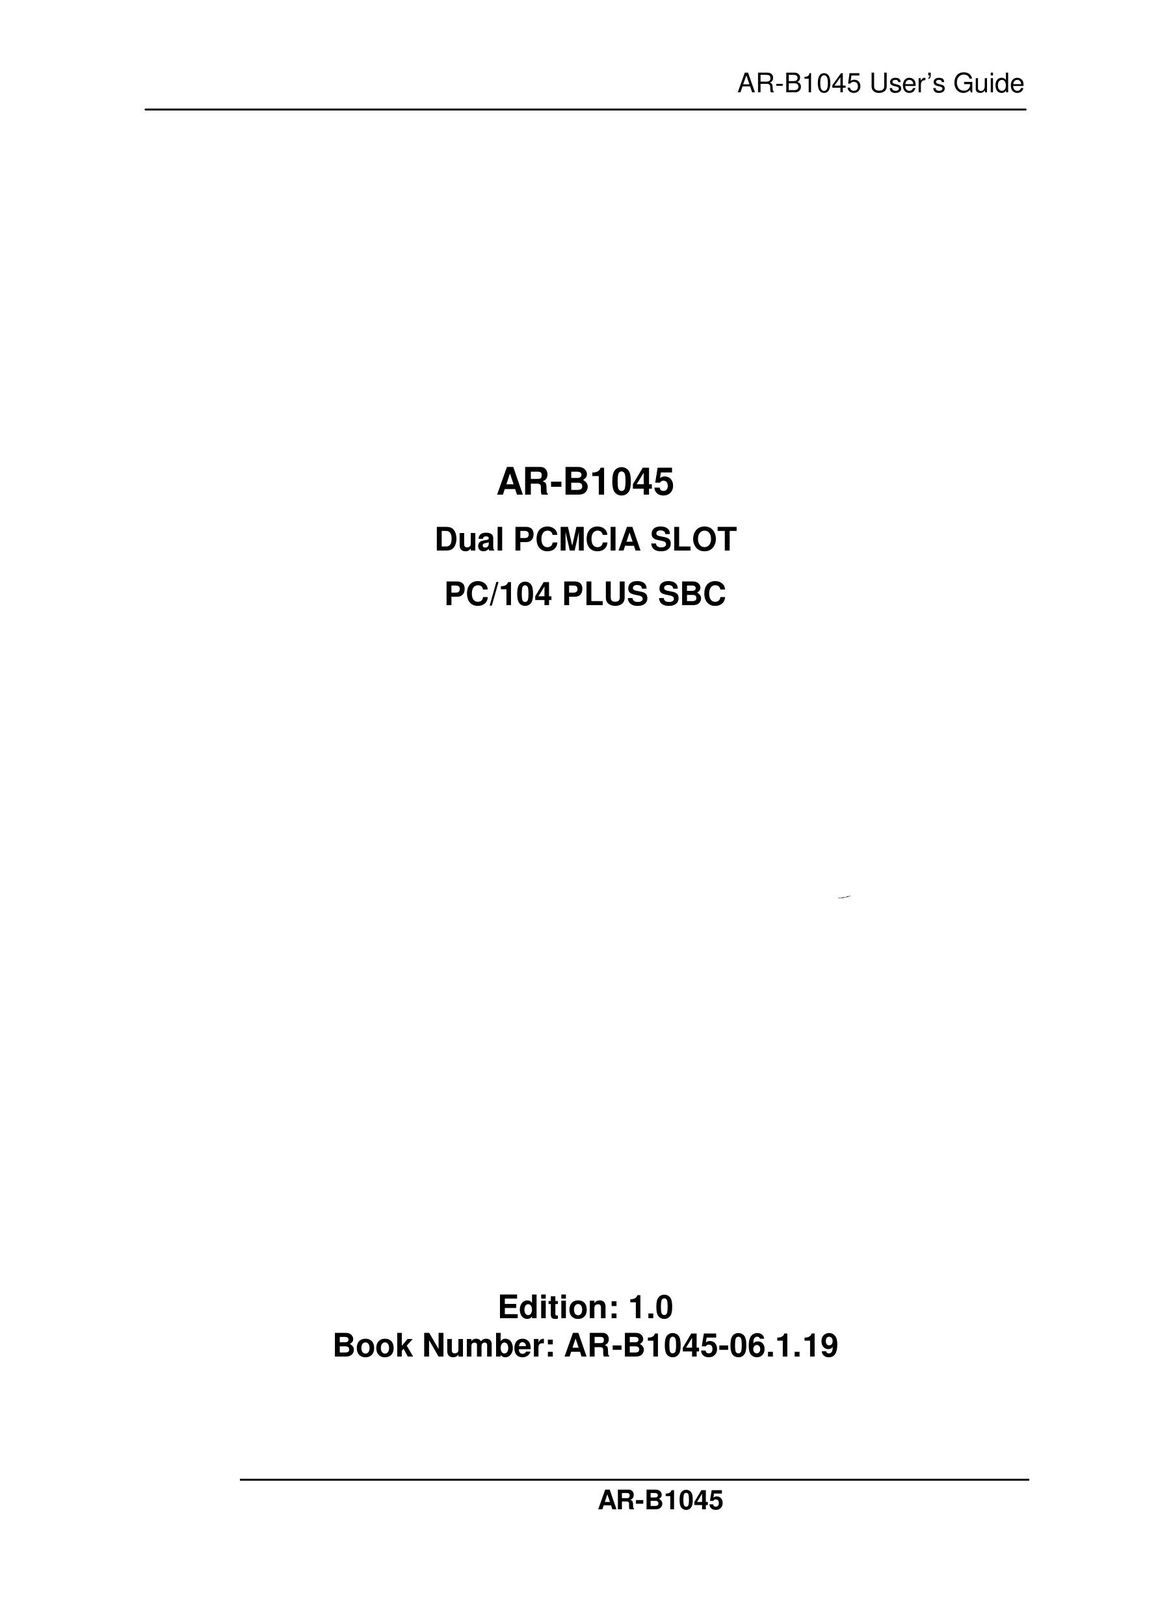 Ricoh AR-B1045 Network Card User Manual